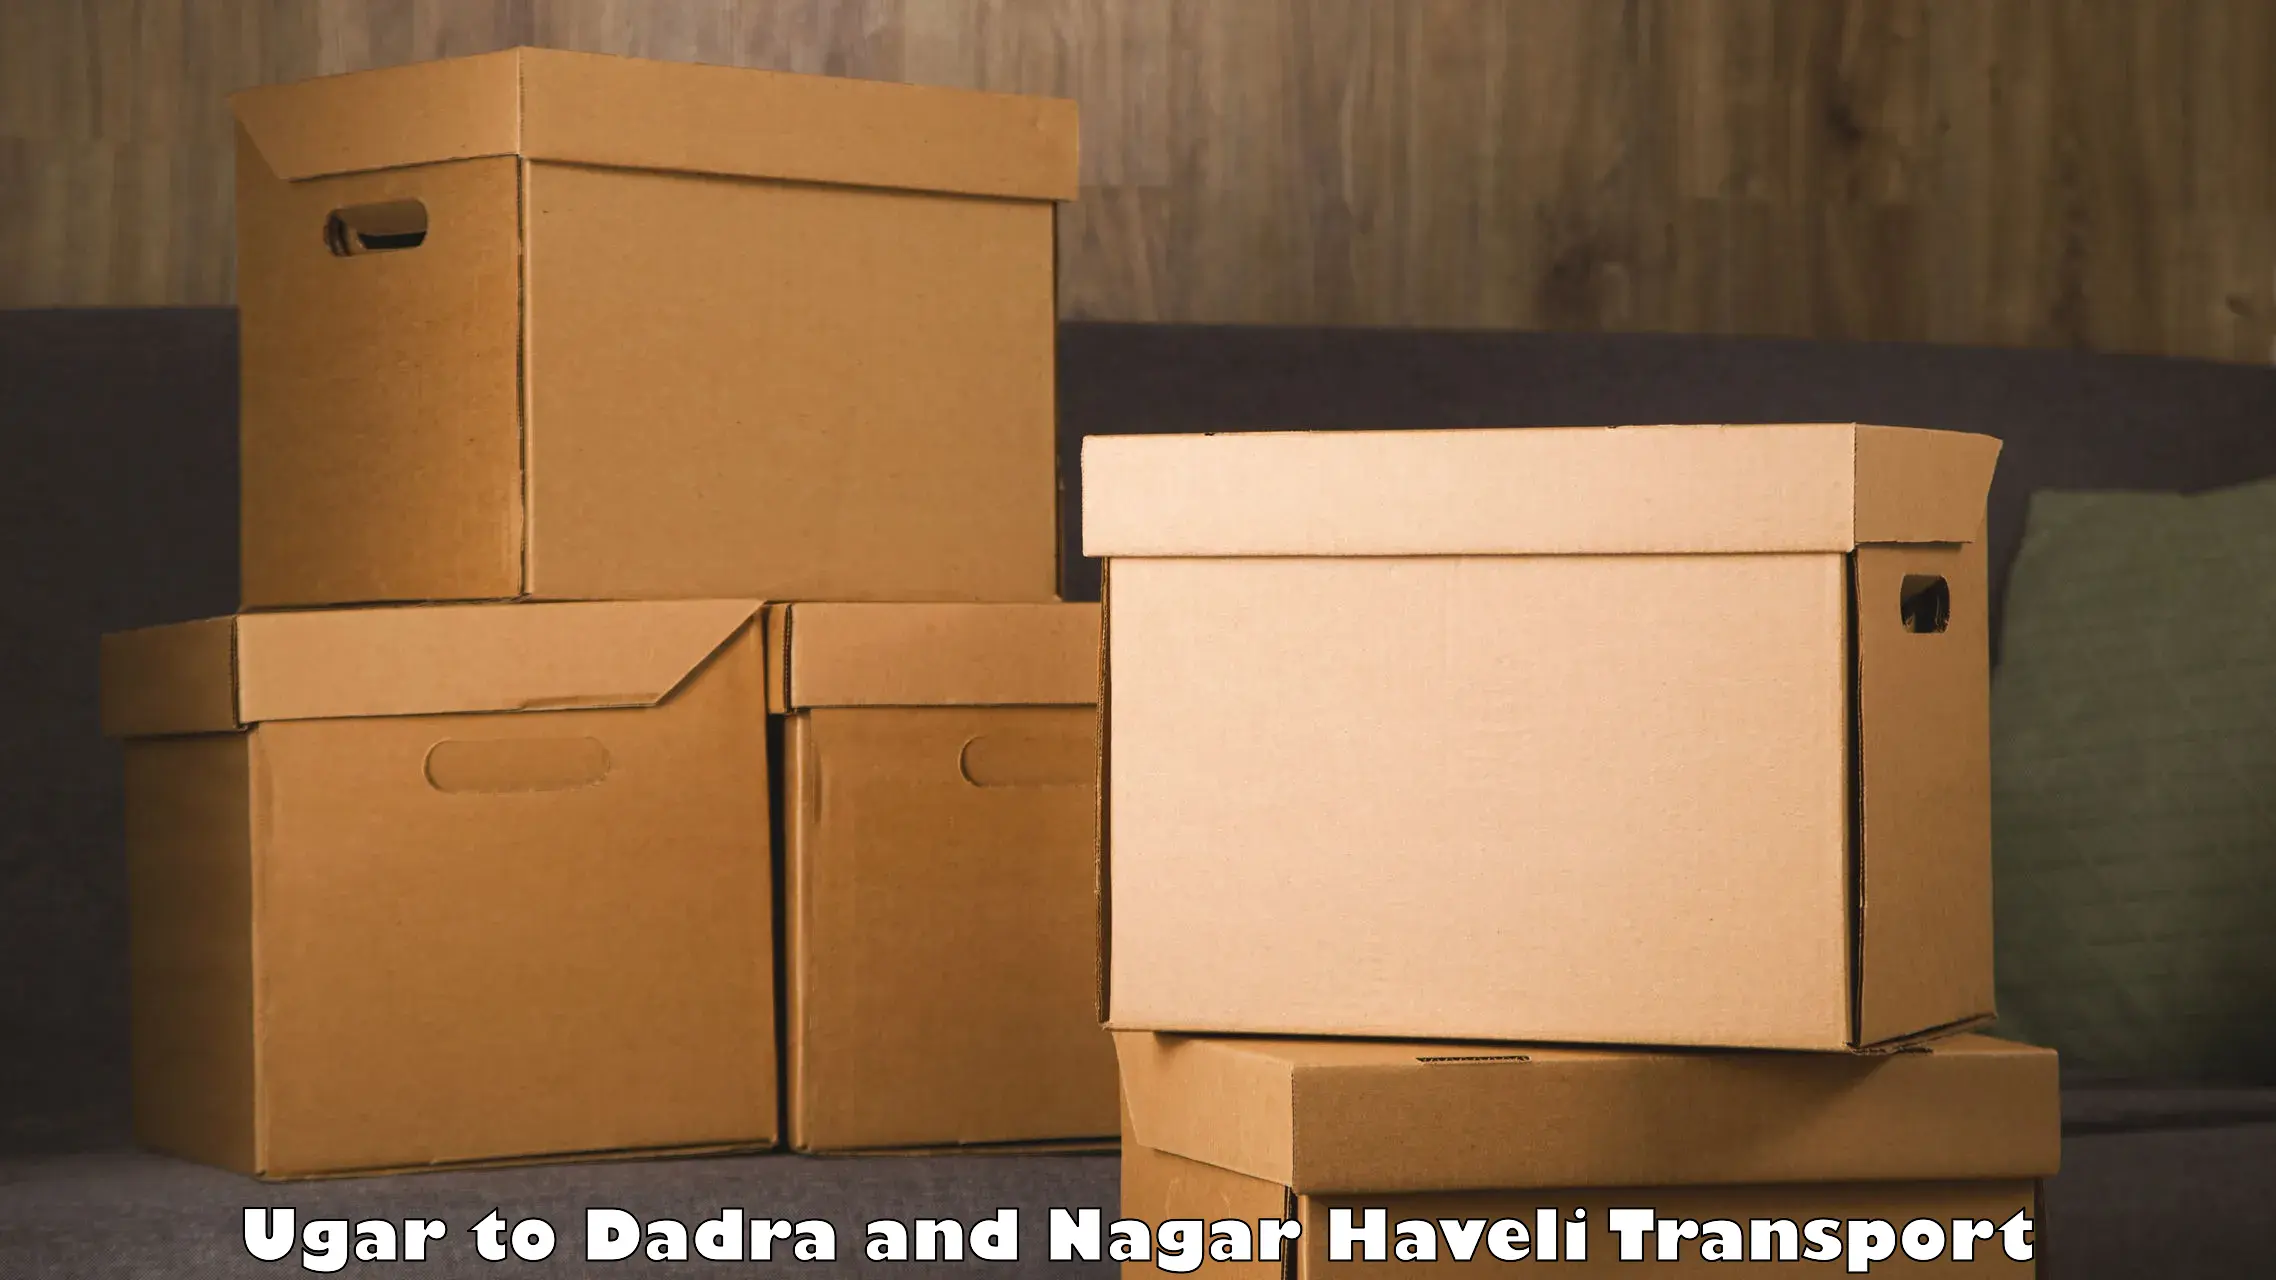 Shipping partner Ugar to Dadra and Nagar Haveli